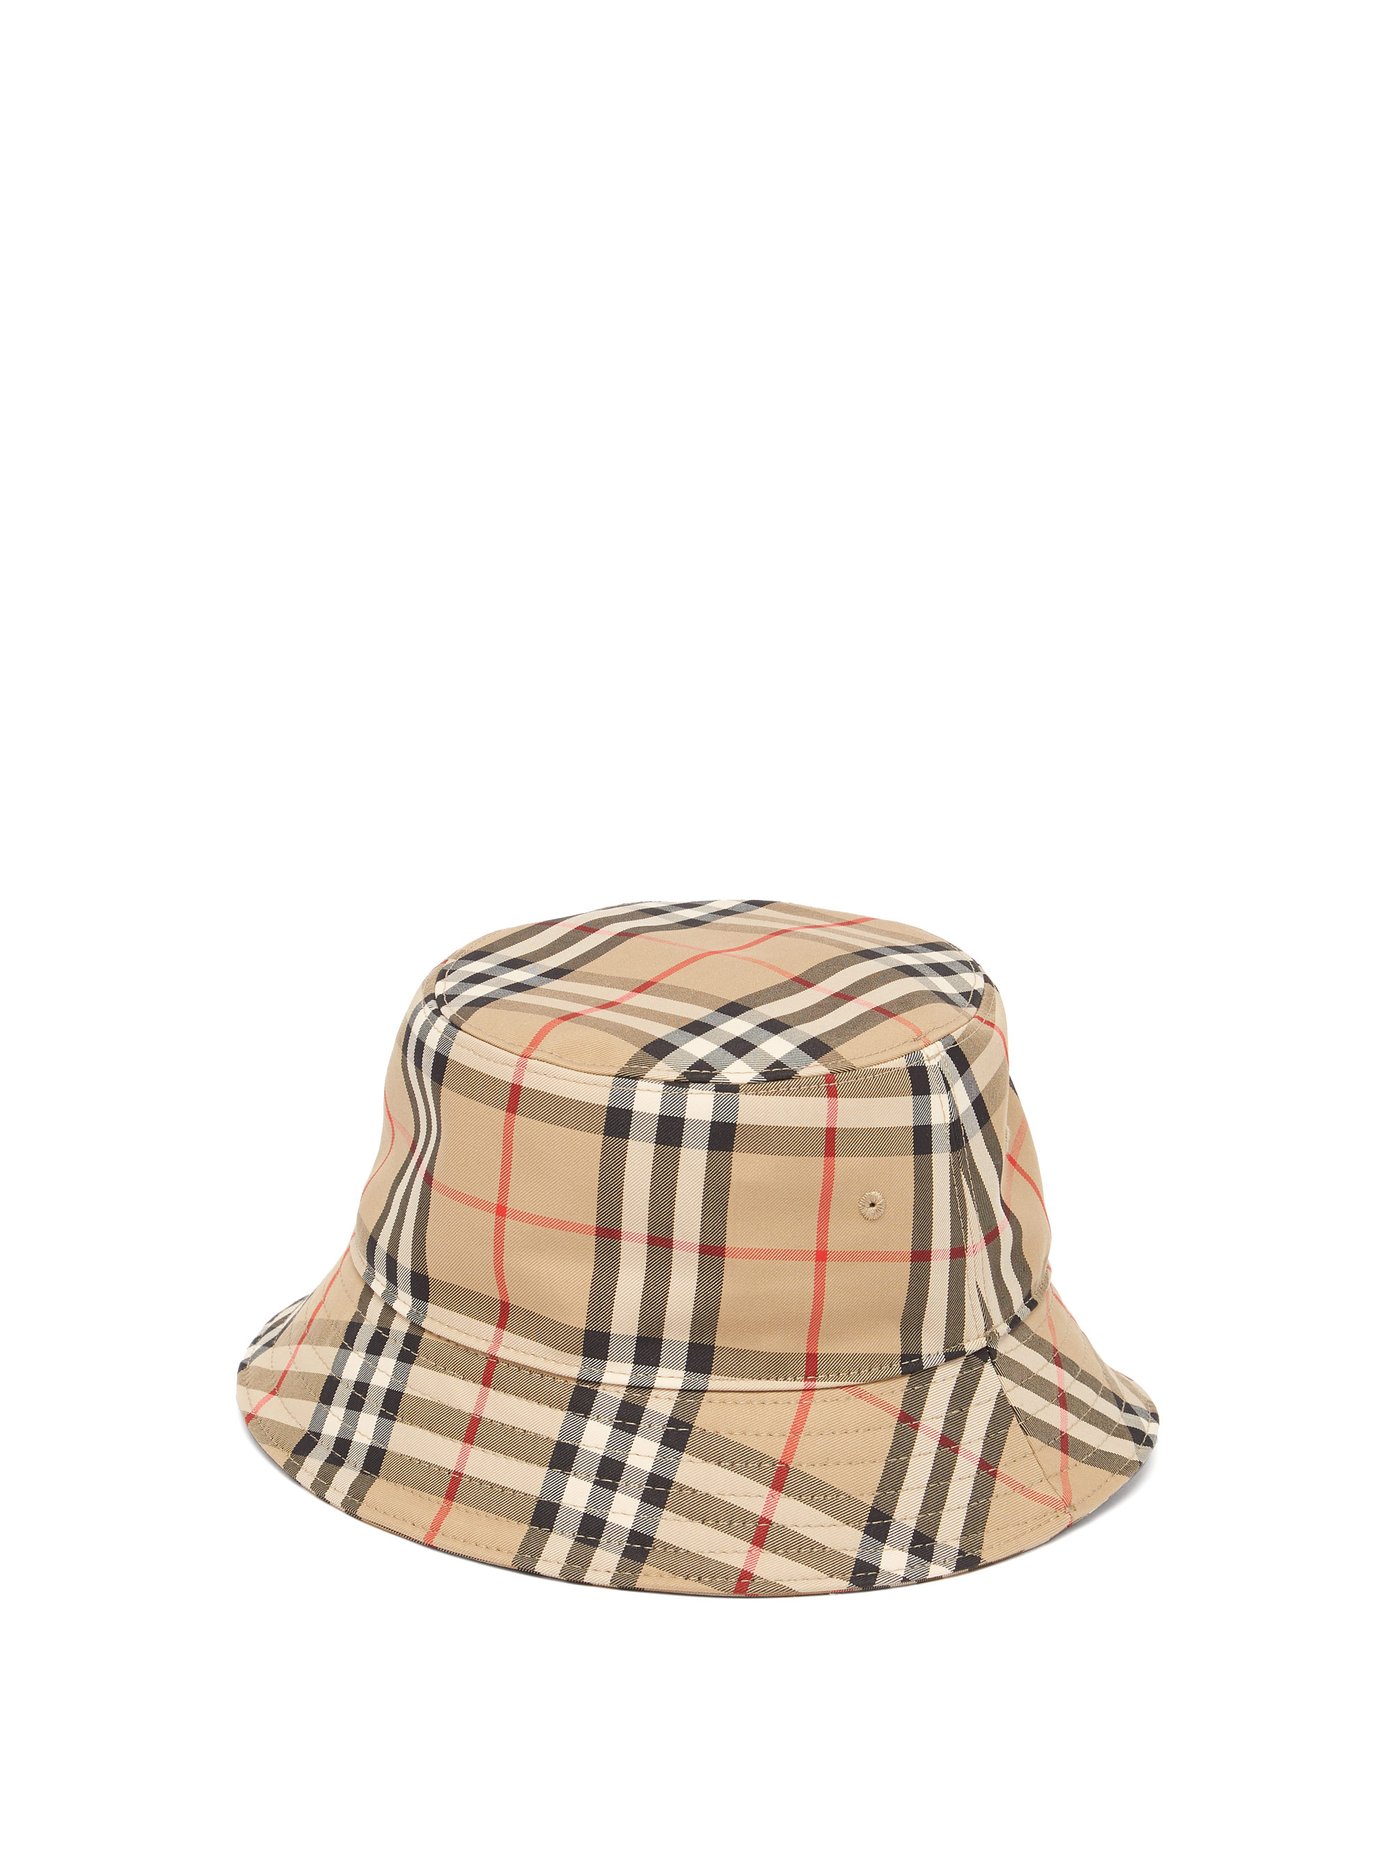 Burberry Check Hat Best Sale, 53% OFF | themintgreentagsalecompany.com